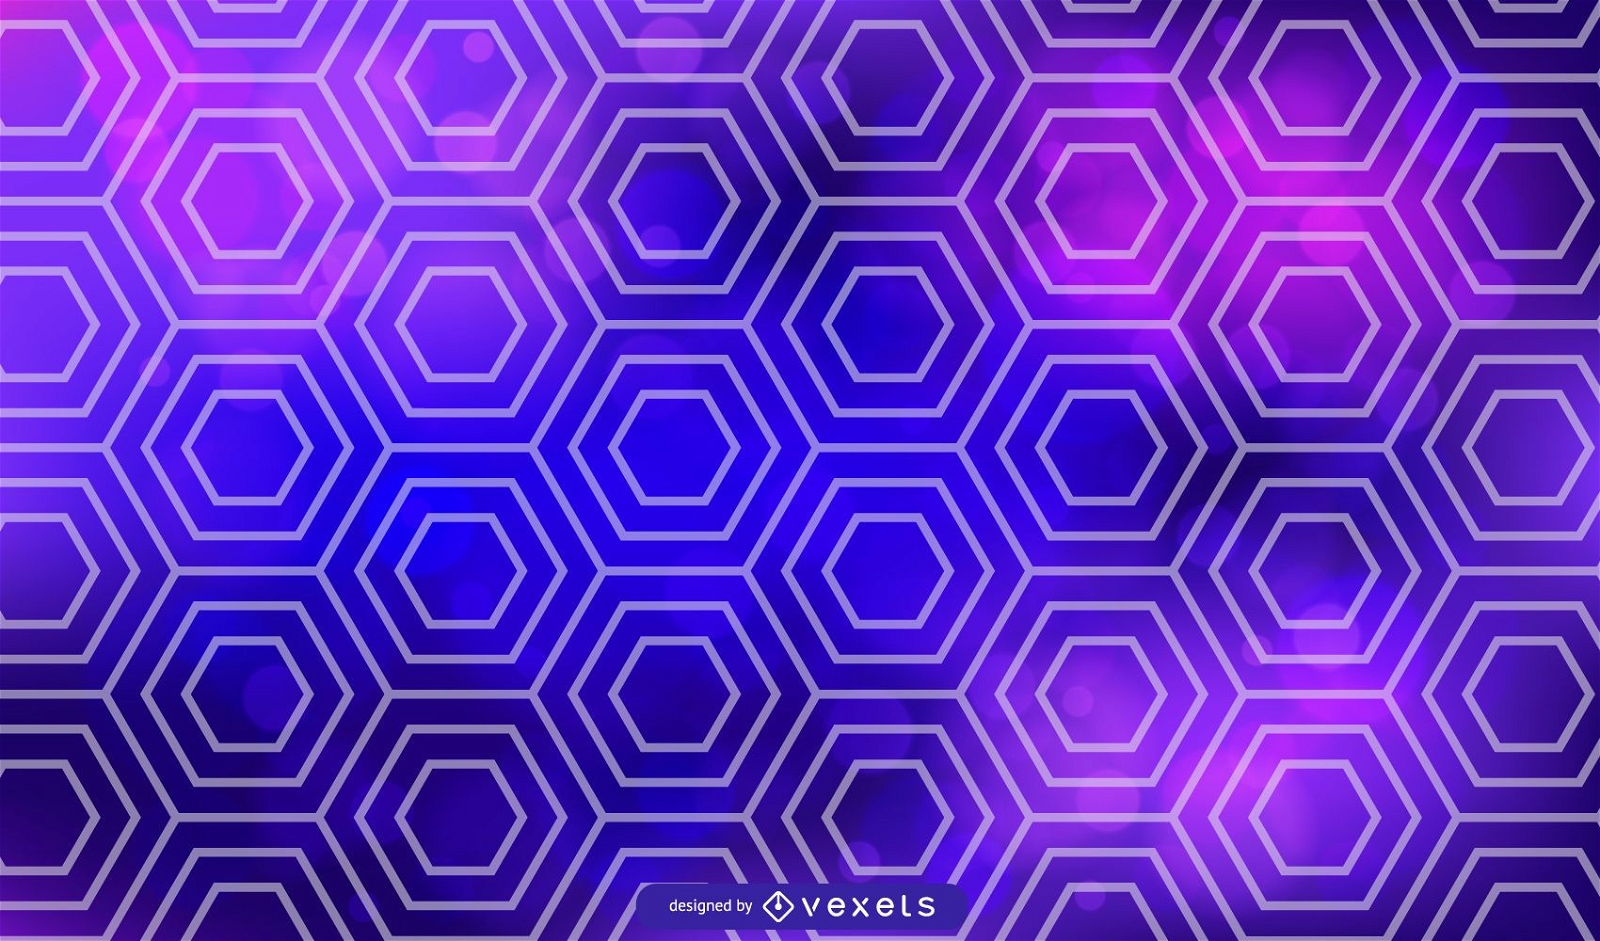 Vector hexagonal azul y morado